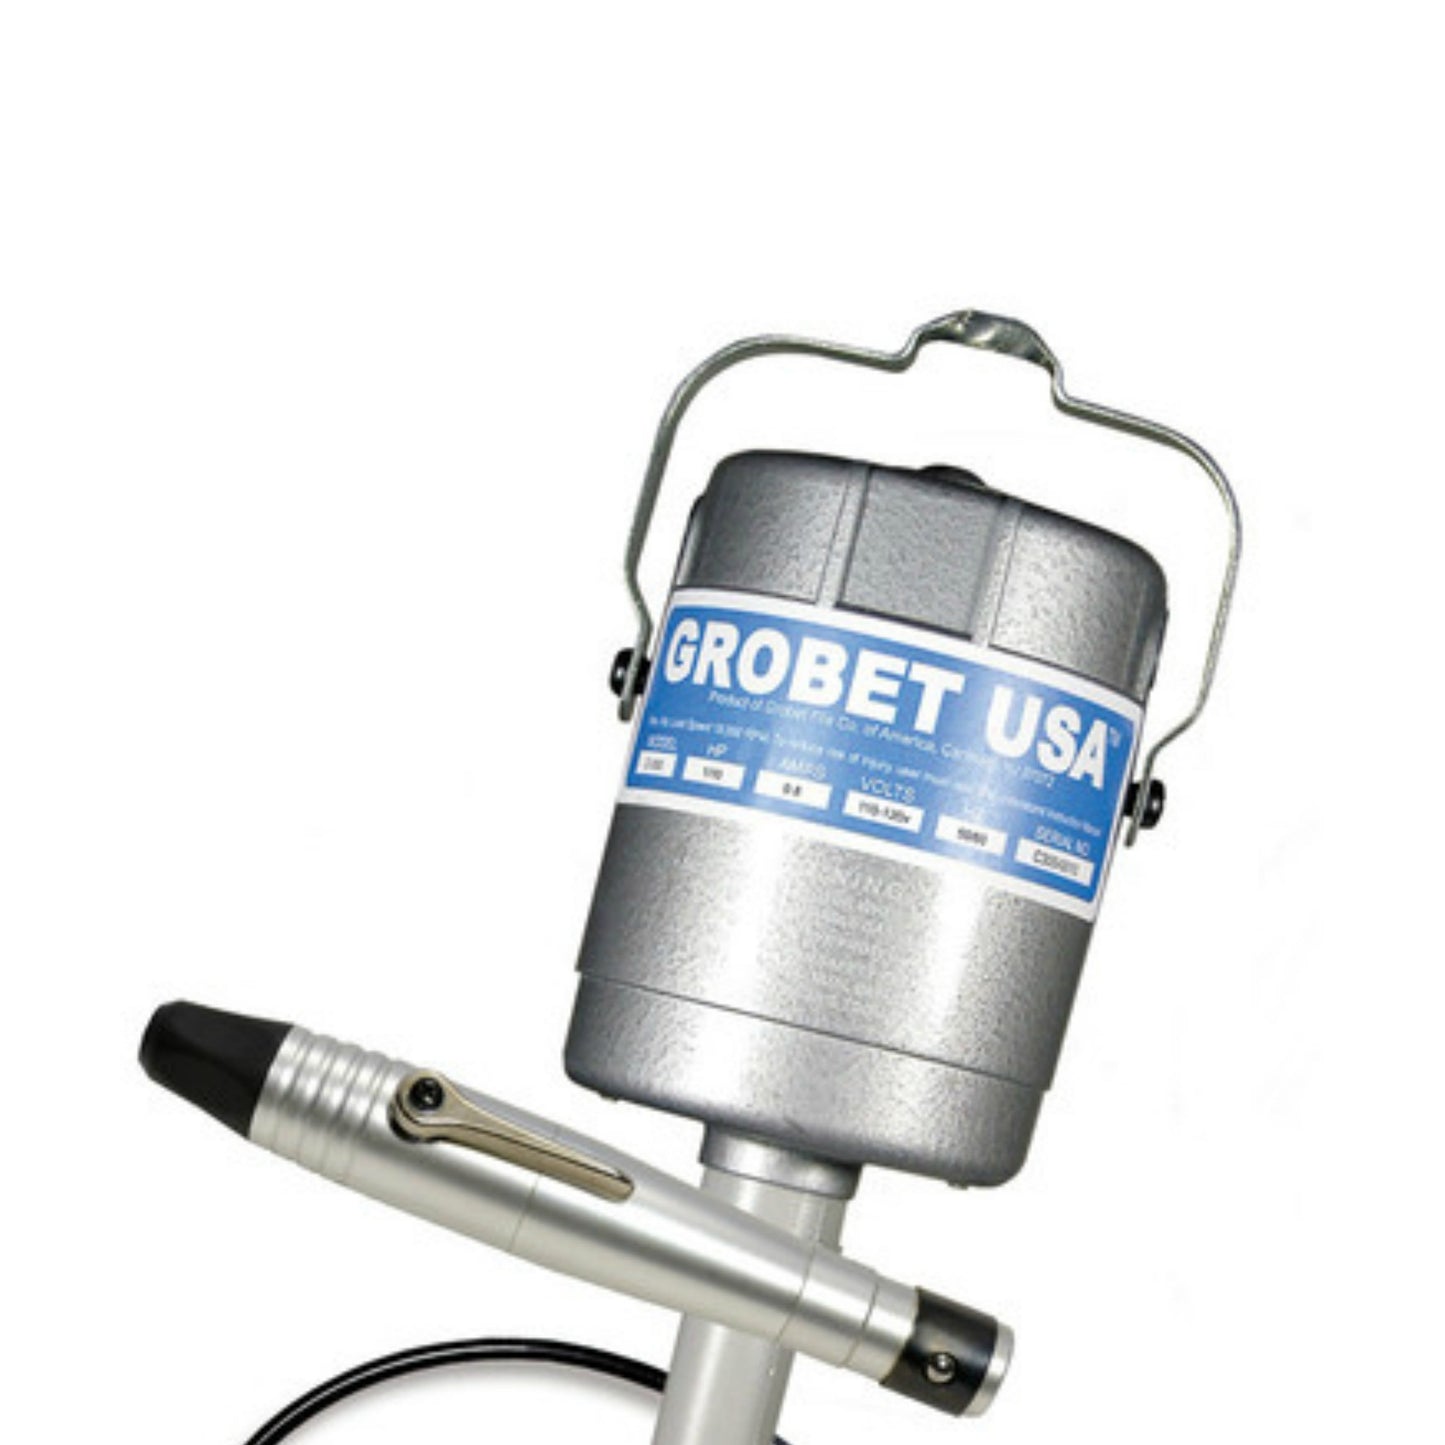 Grobet USA® Flexible Shaft Motor + Quick Change Handpiece - S-300